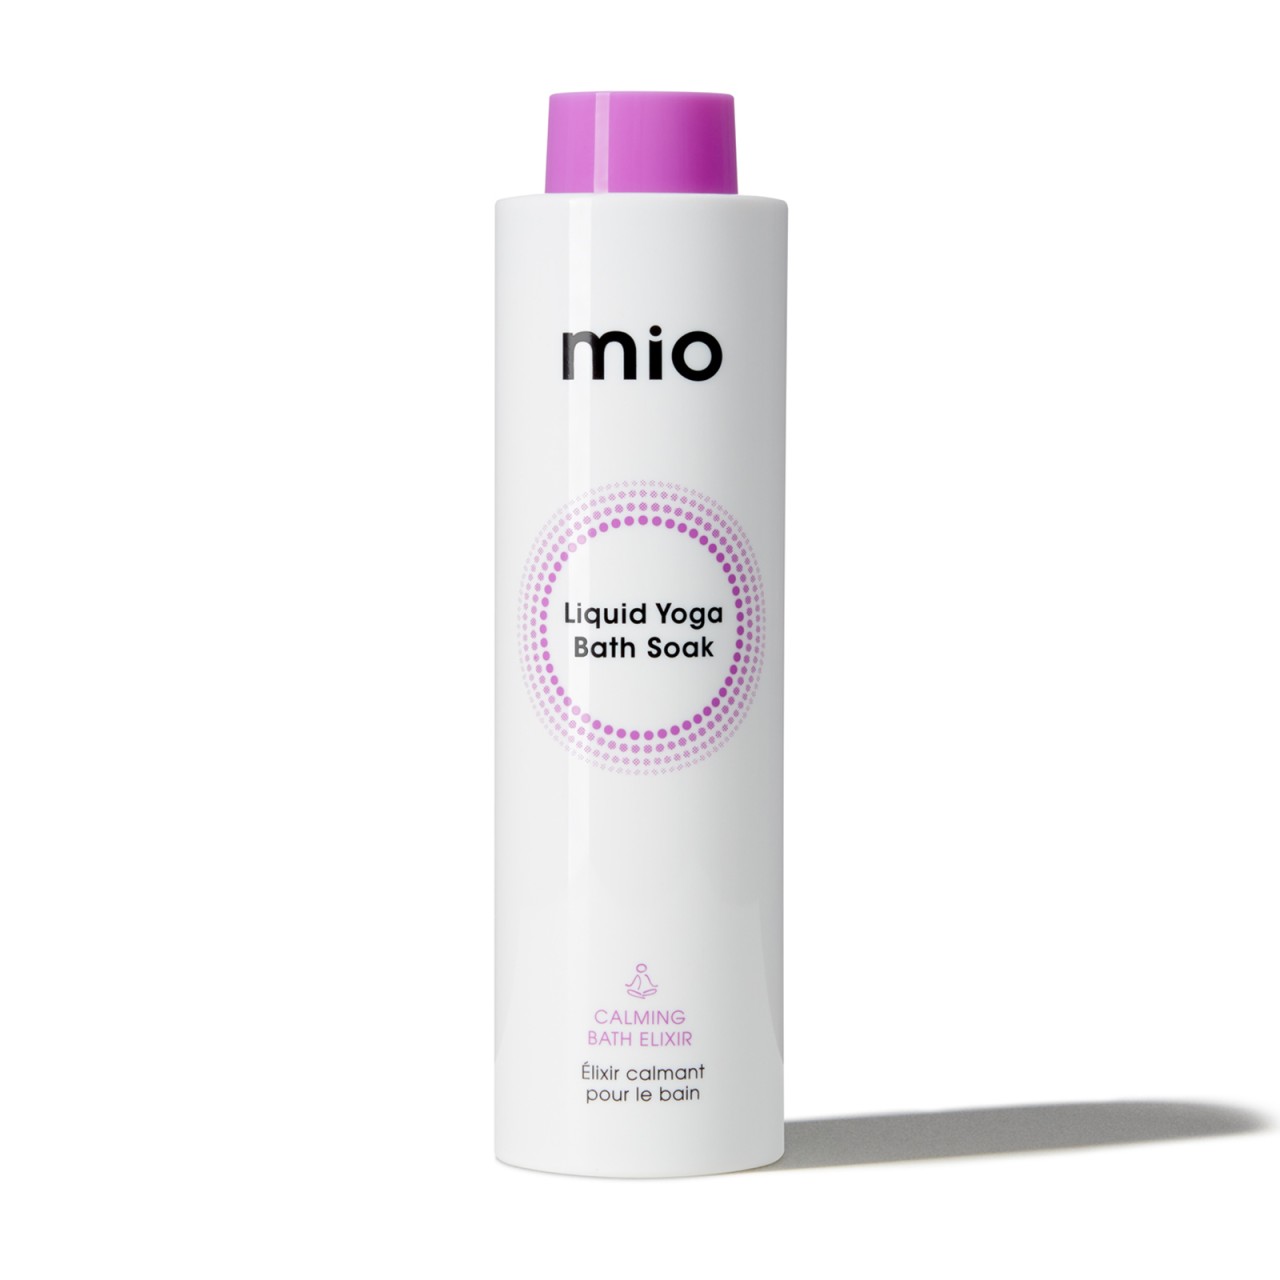 Mio - Liquid Yoga Bath Soak - 